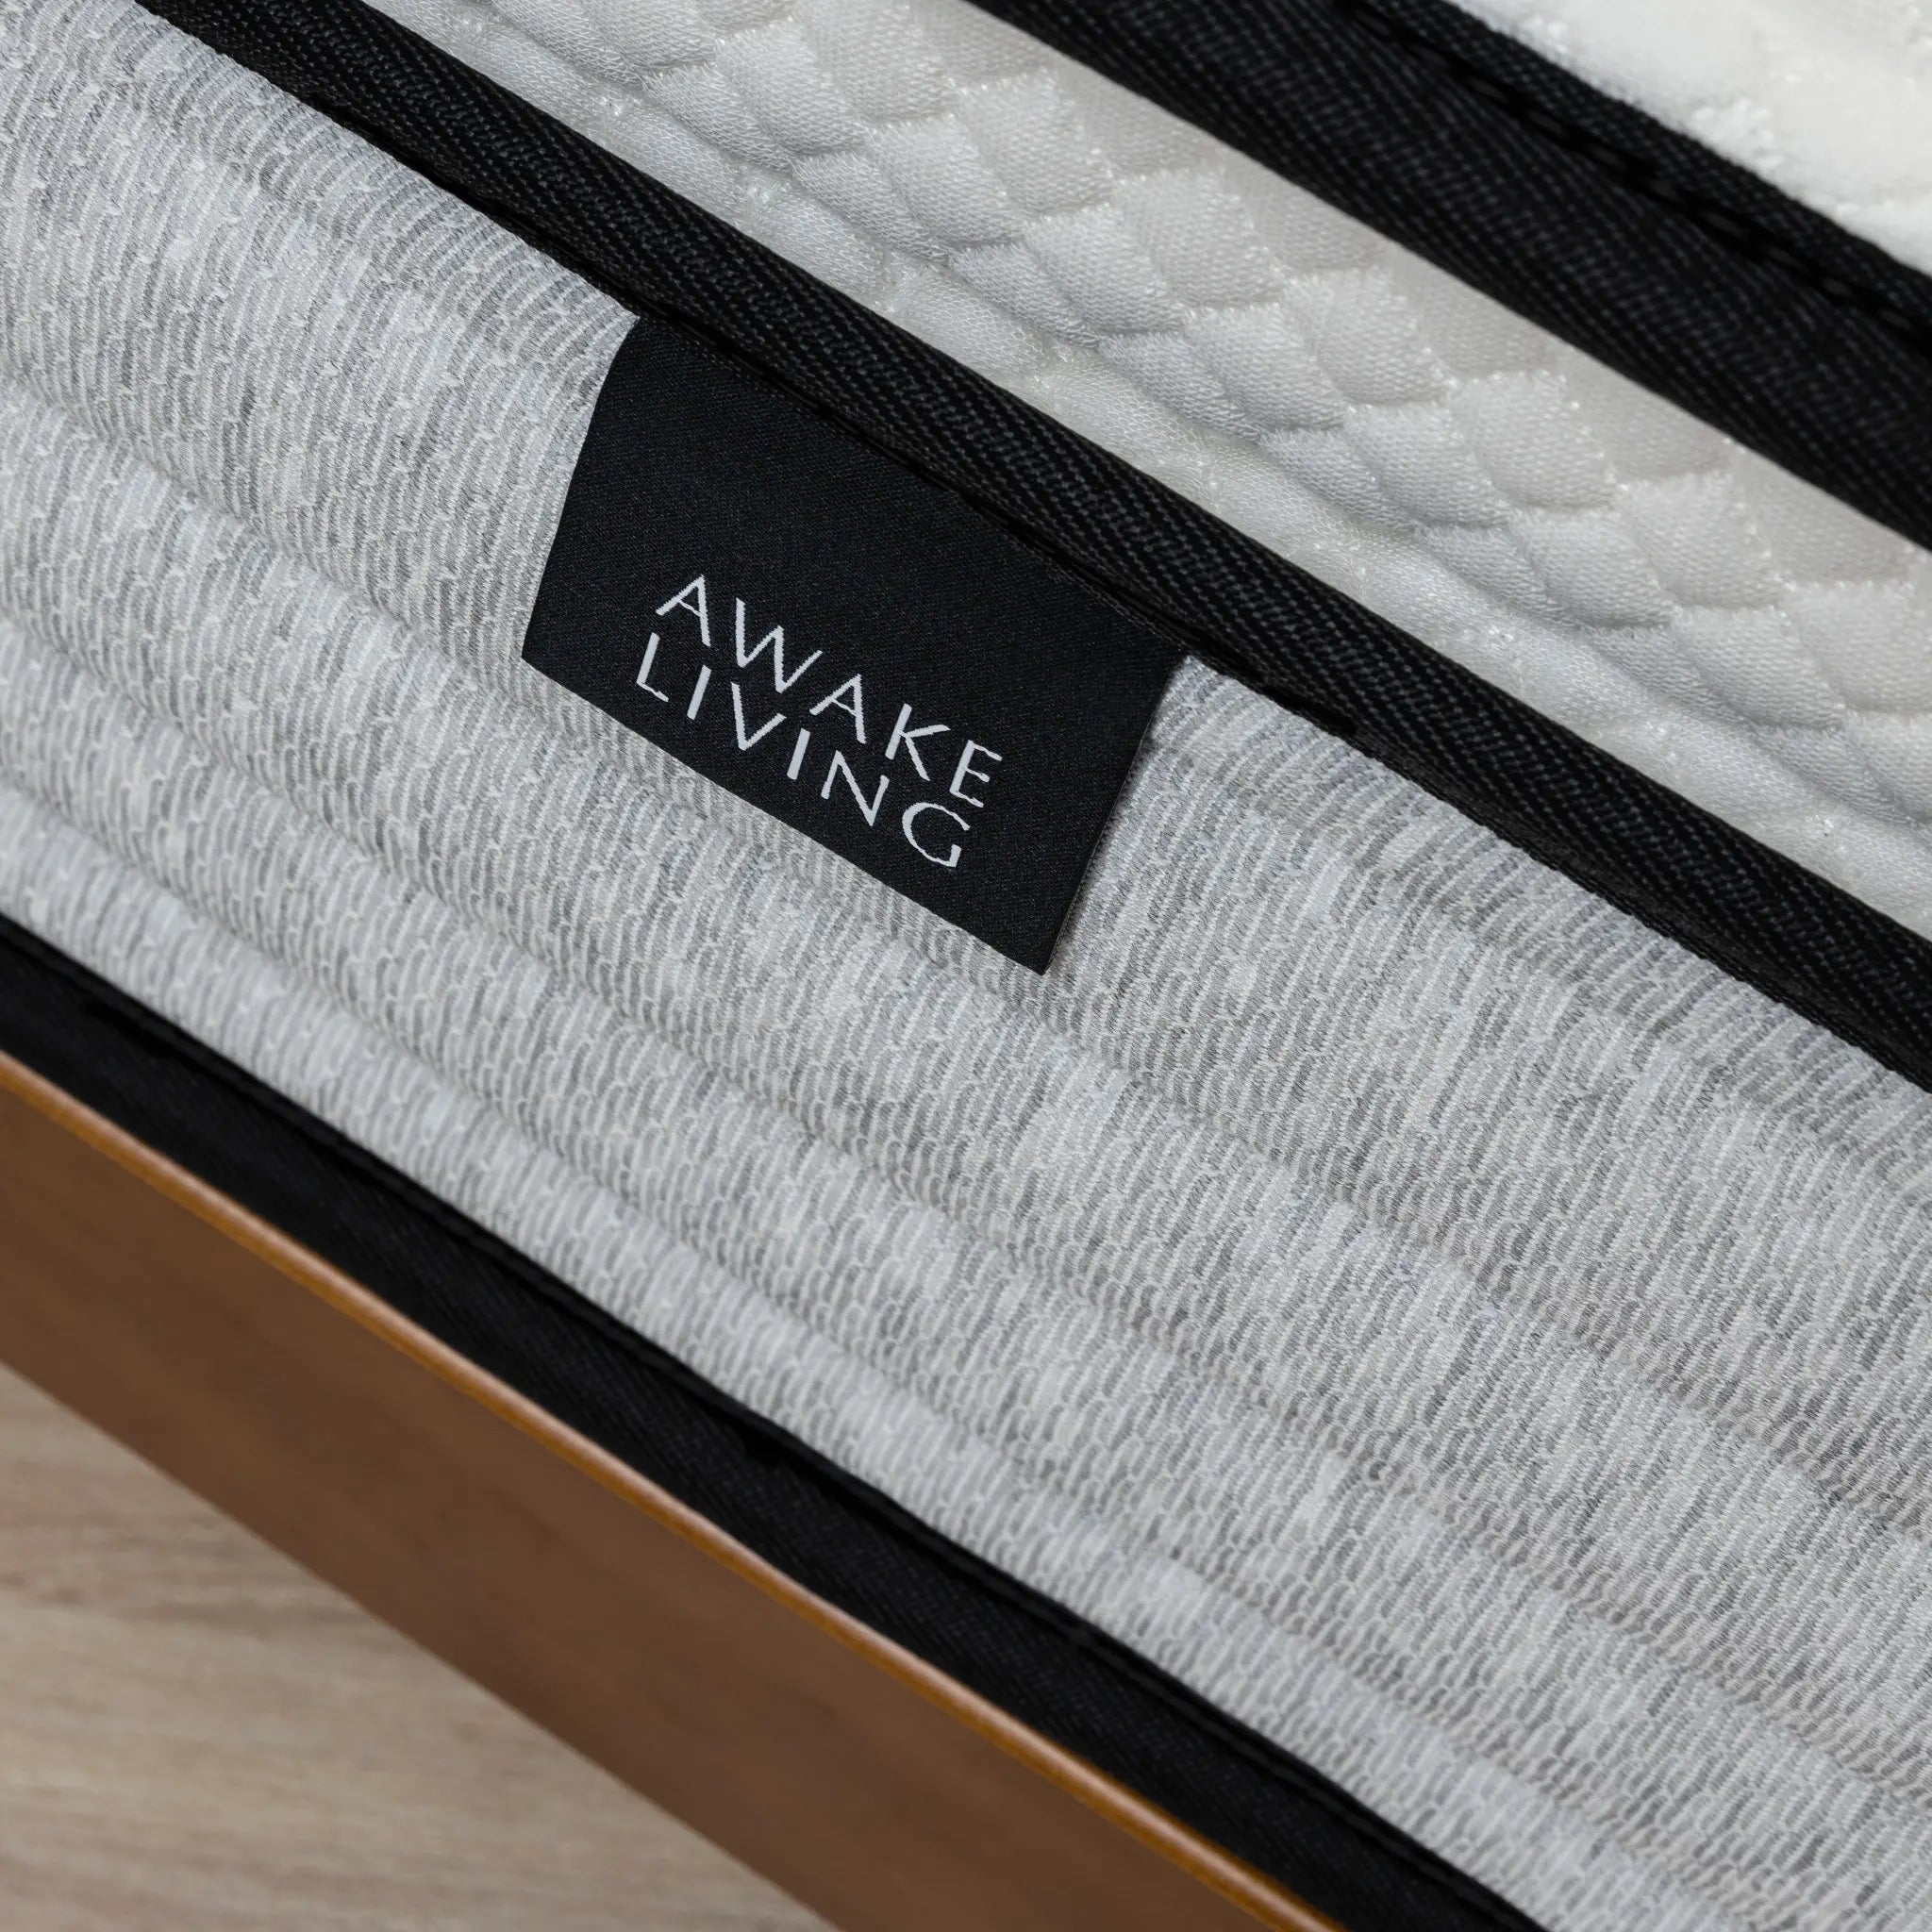  Luxury 3.0 美夢成真頂級三線鋼天絲乳膠獨立筒床墊產品照 - 5